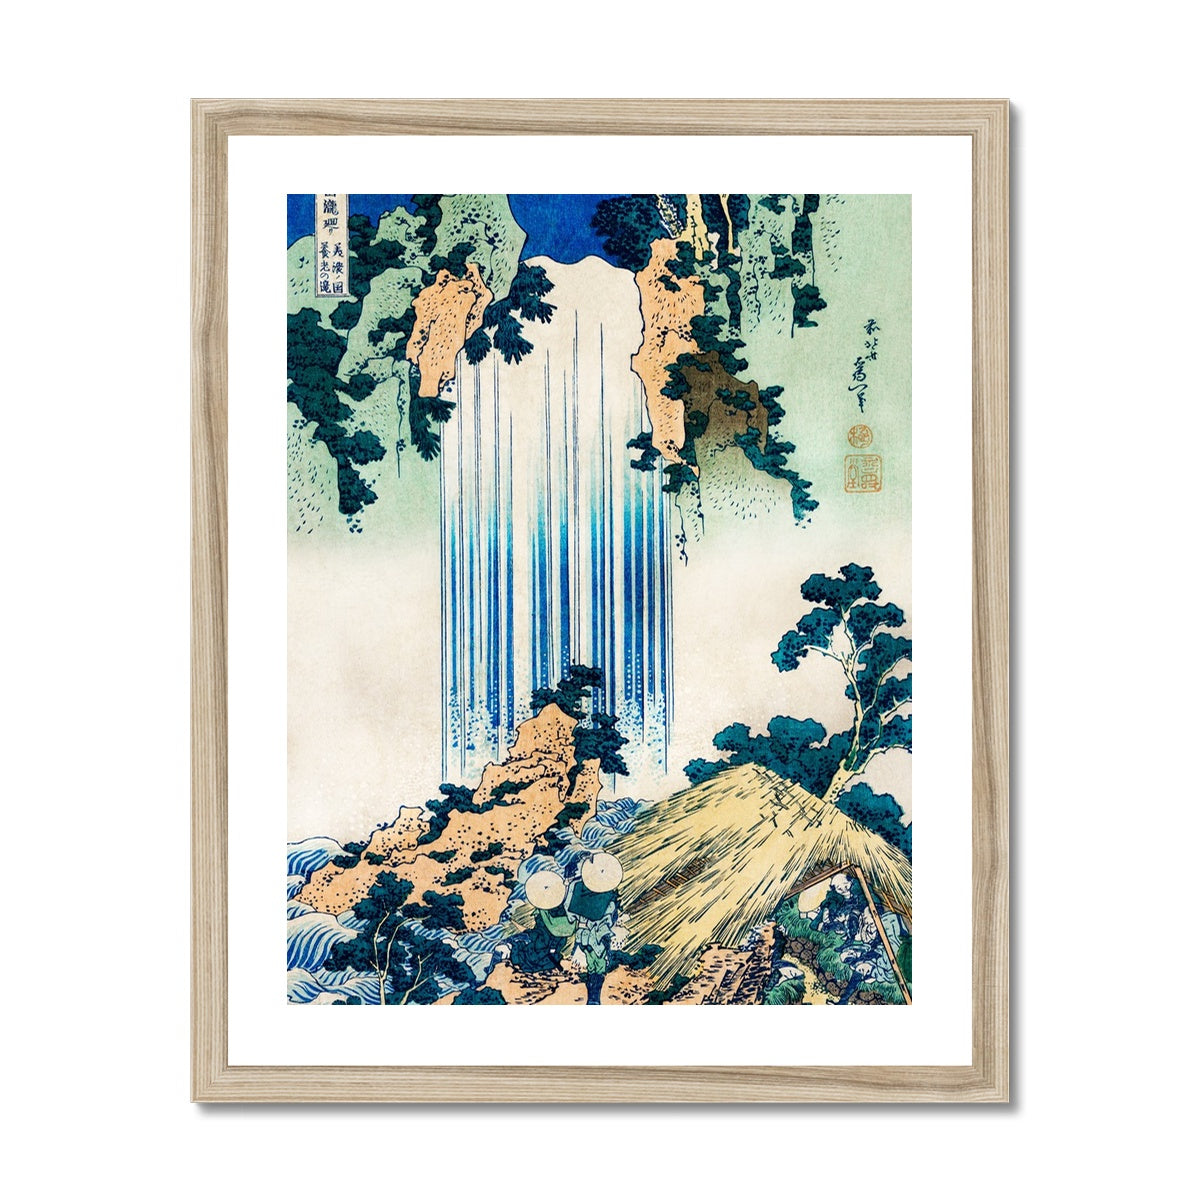 Hokusai - The Yoro Waterfall gerahmtes Poster - Atopurinto